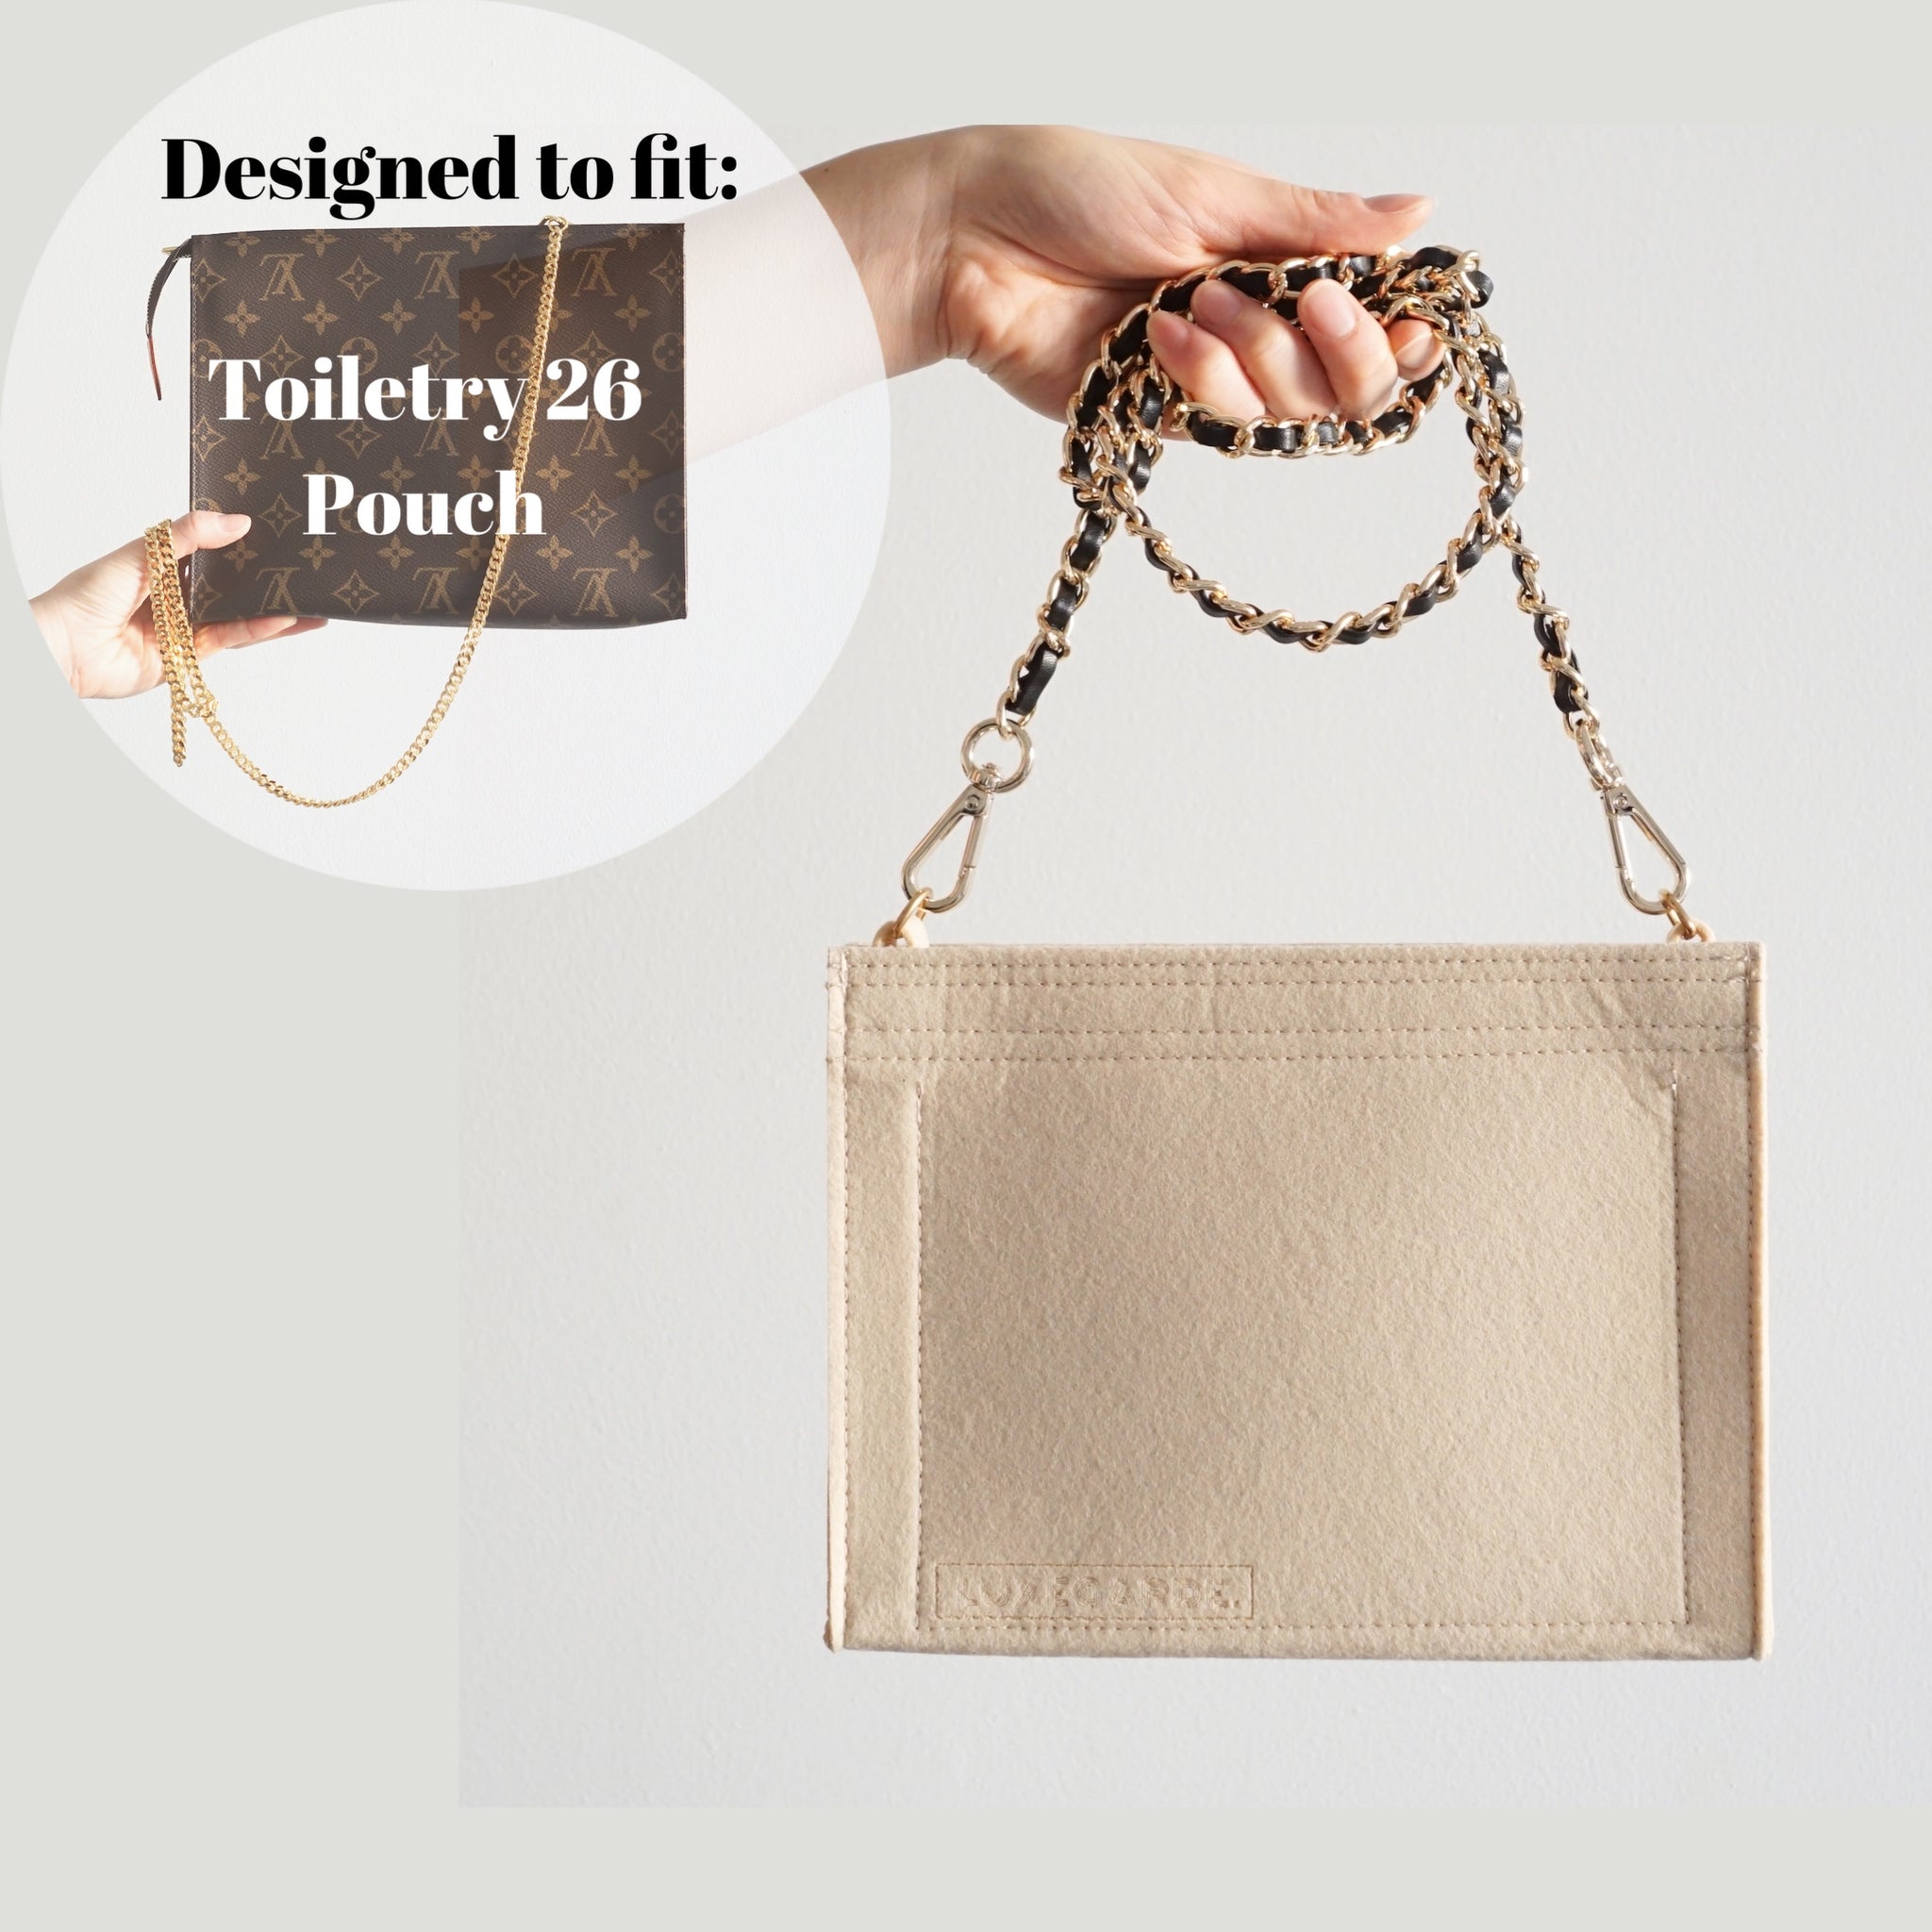 Bag Organizer Insert for Louis Vuitton Toiletry Pouch 26 Bag – Luxegarde